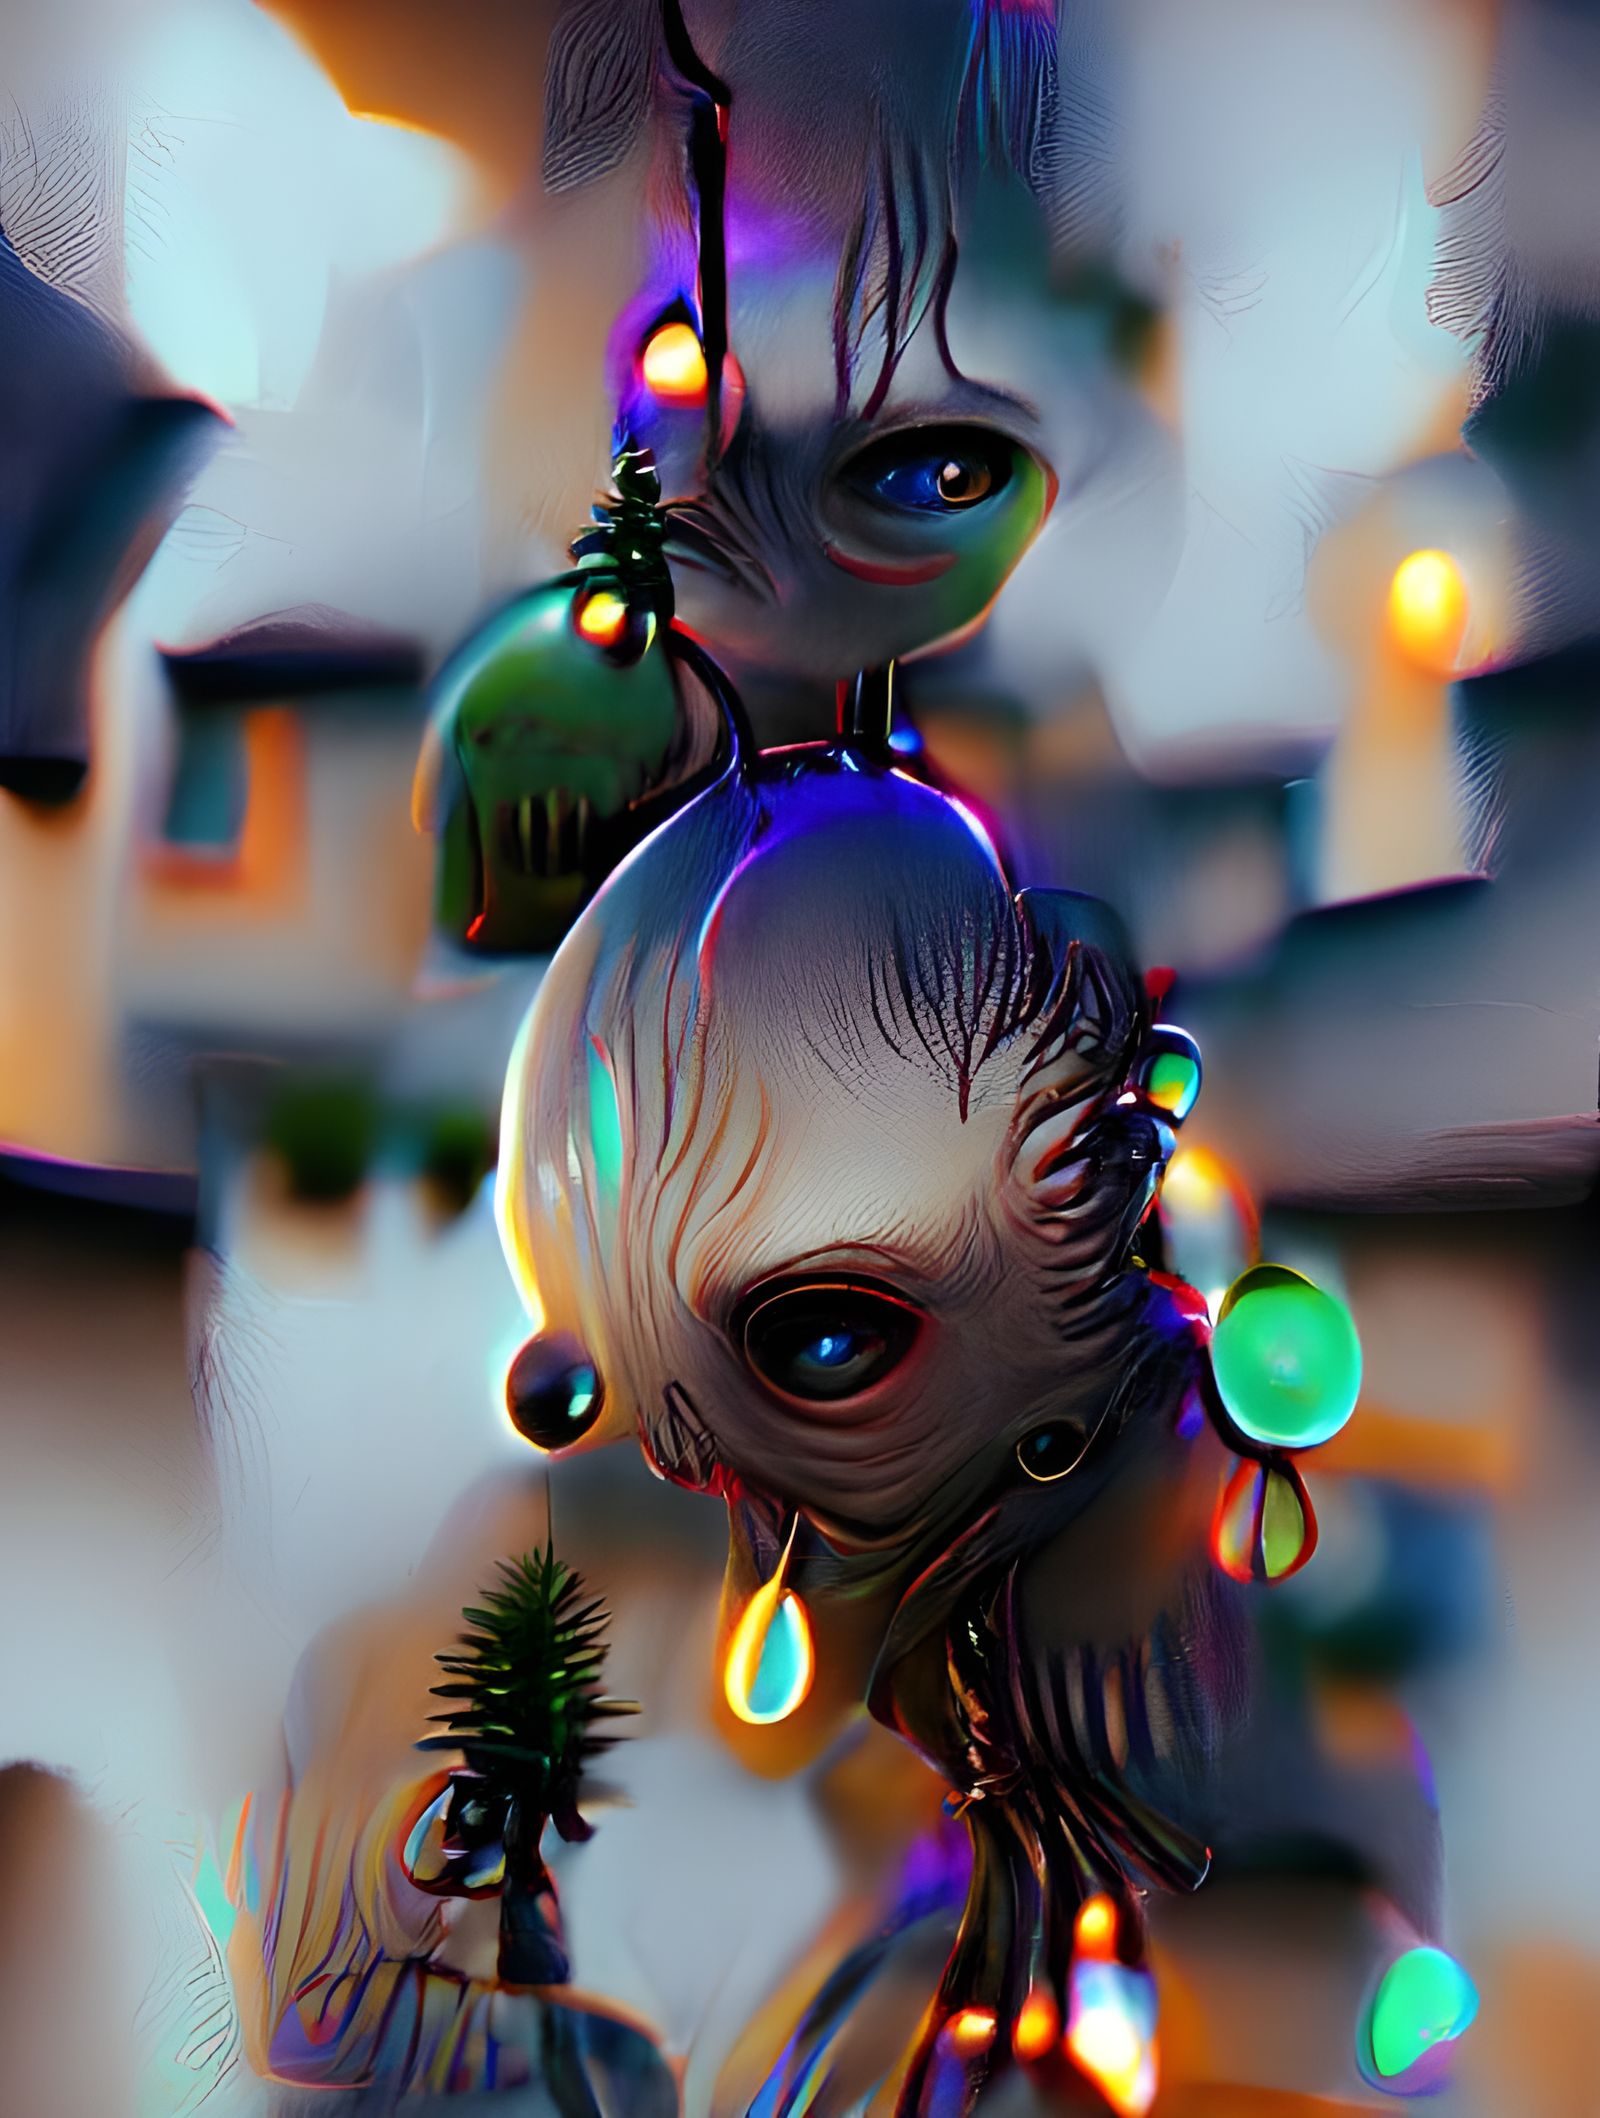 The Sad Ornament